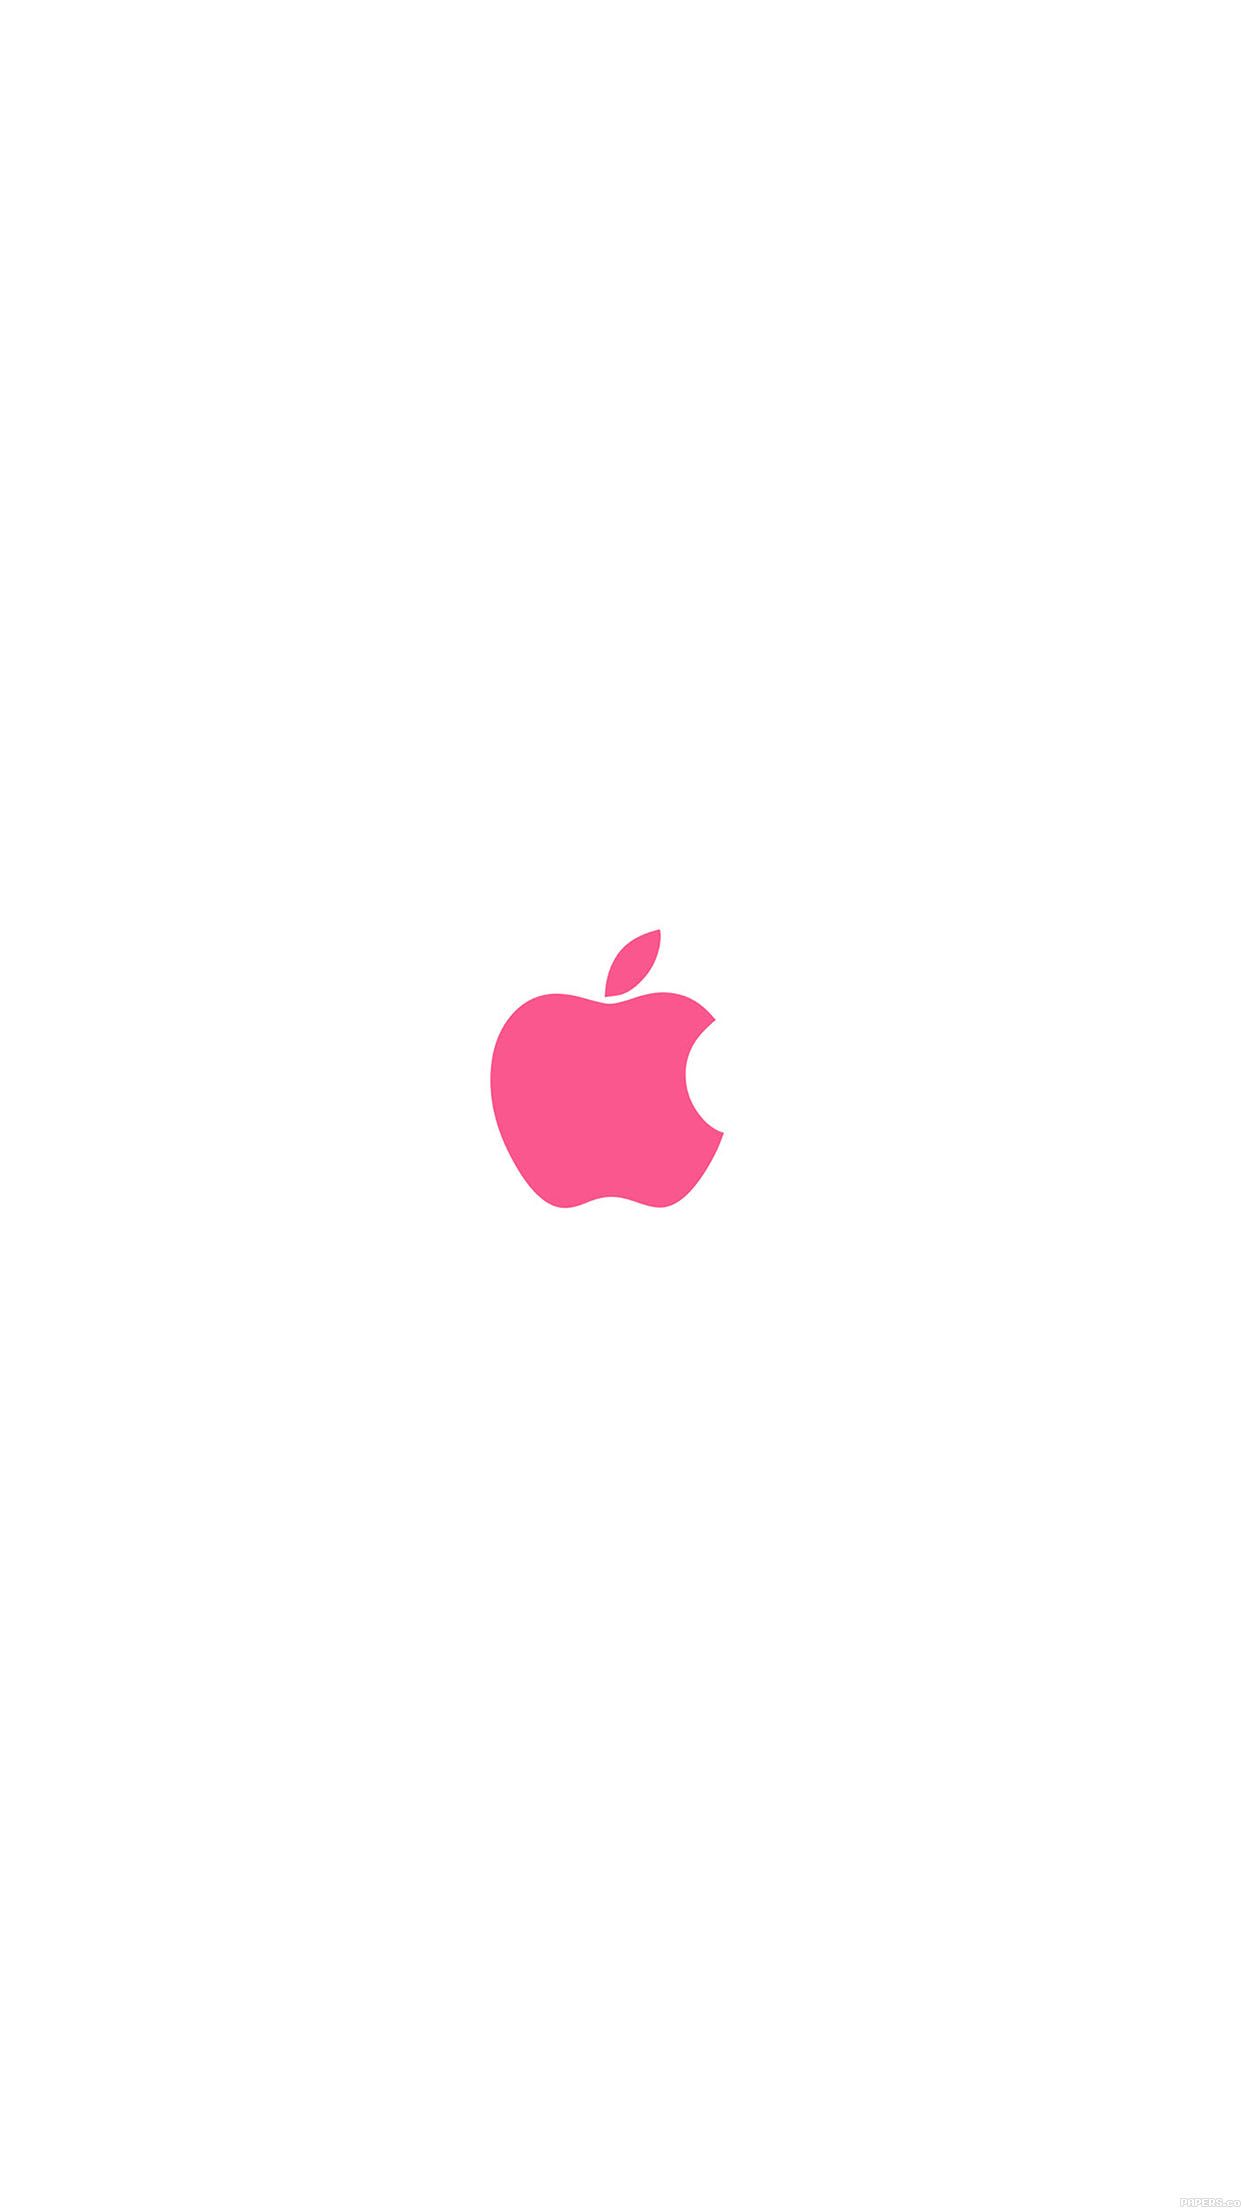 Apple Logo Color Red Minimal. Apple logo wallpaper iphone, Apple